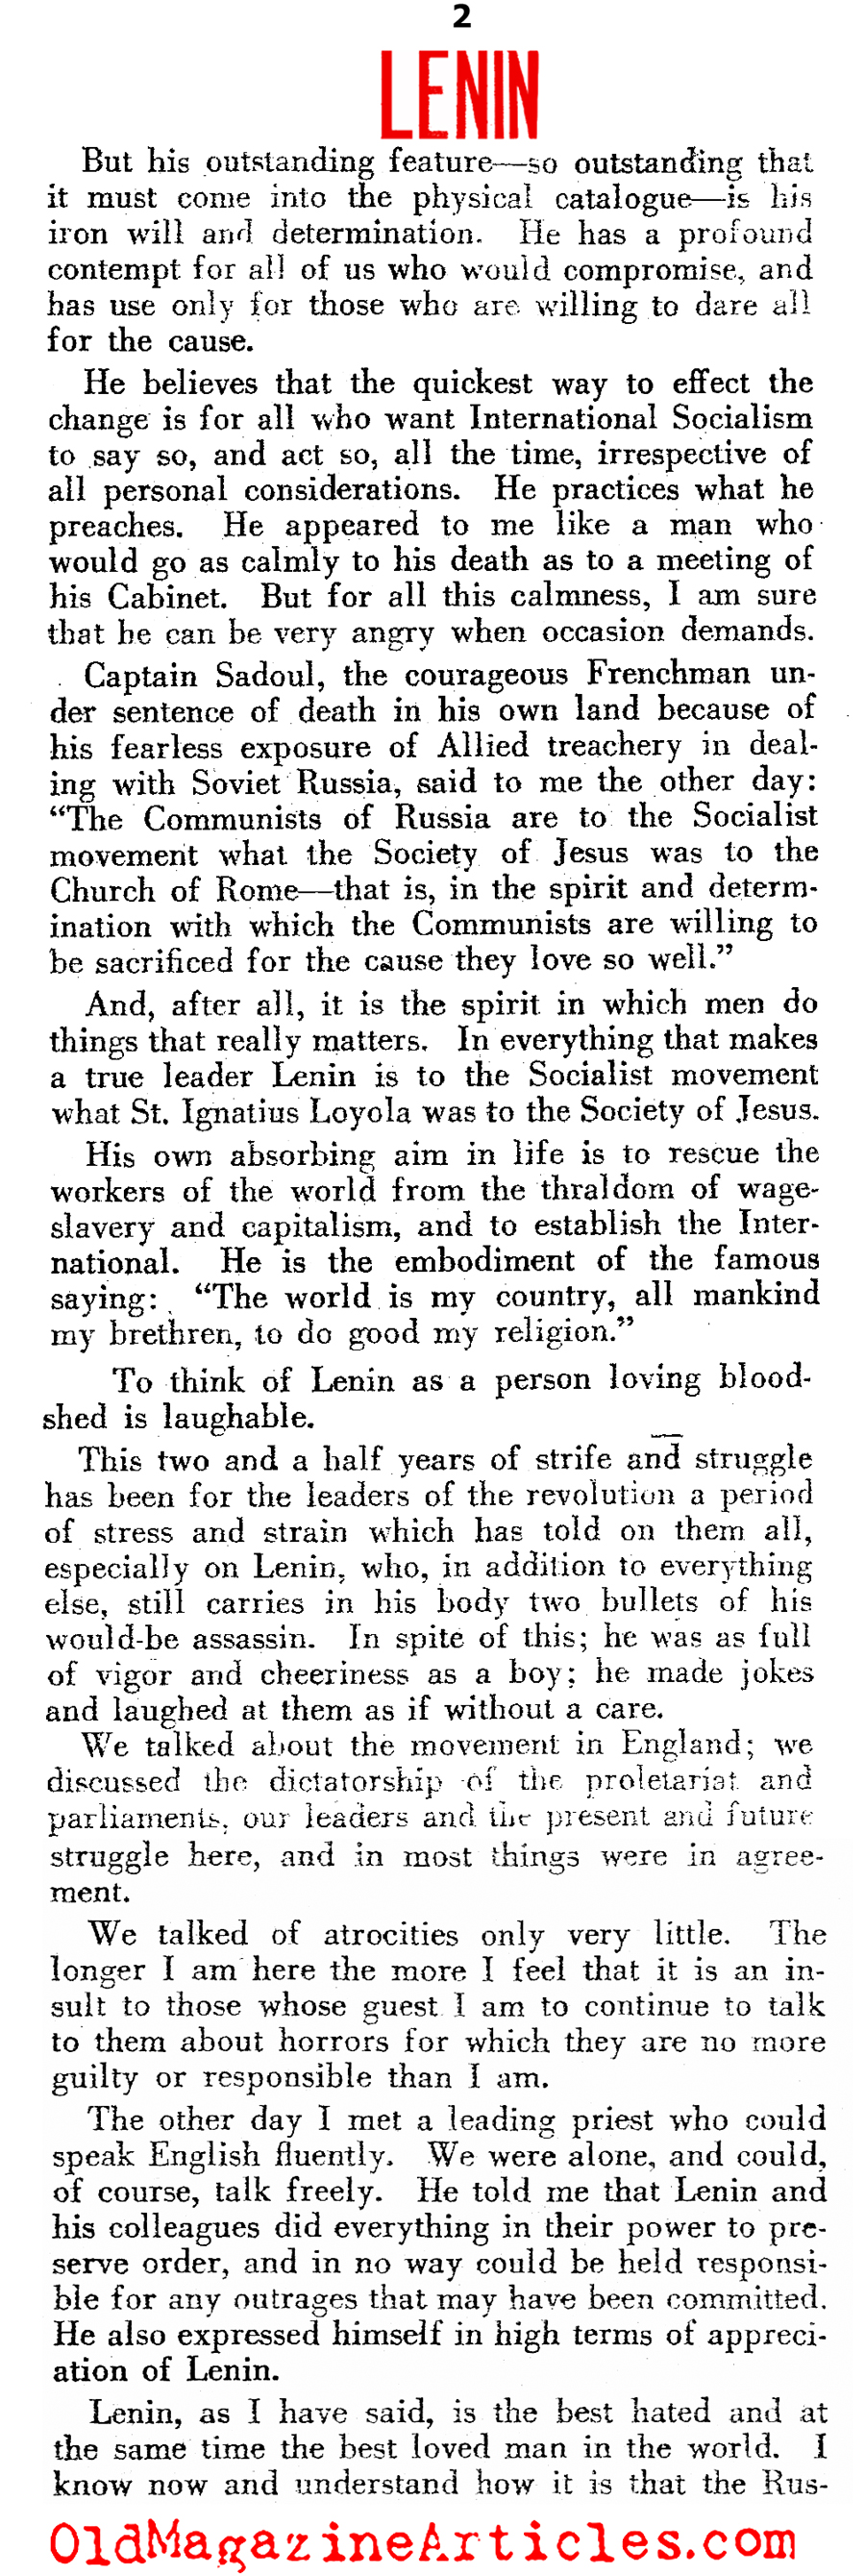 A Love Letter to Lenin (Soviet Russia Magazine, 1920)